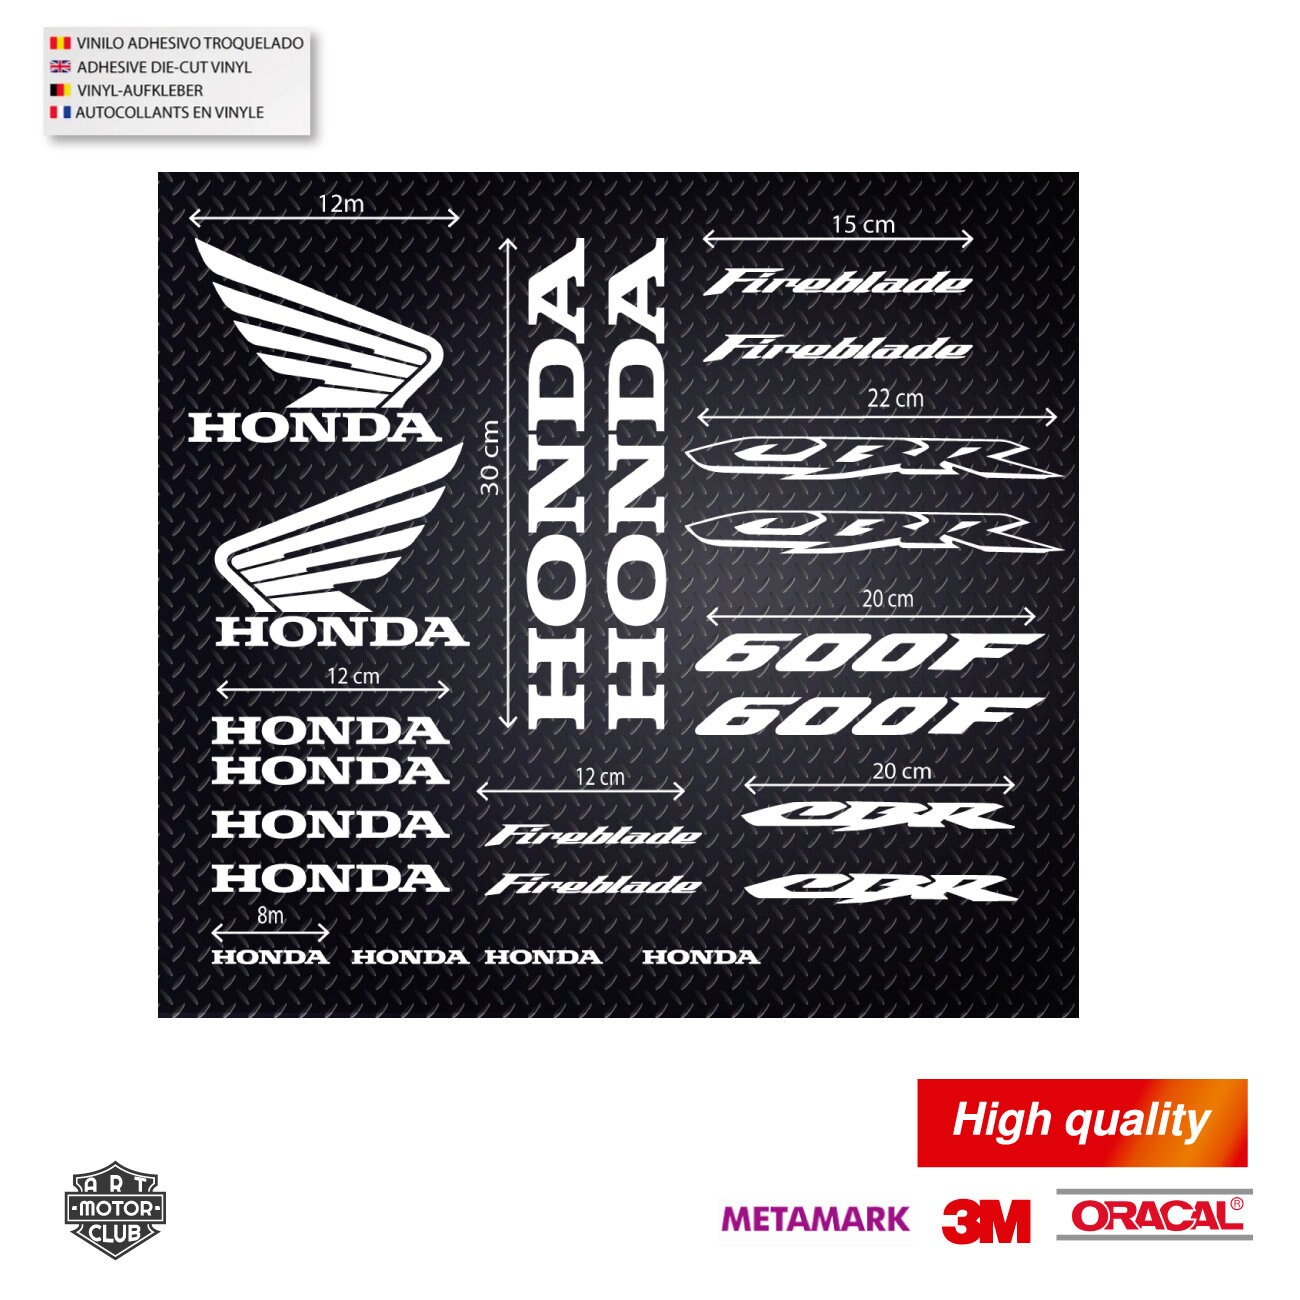 Honda 600f adhesive for sale  